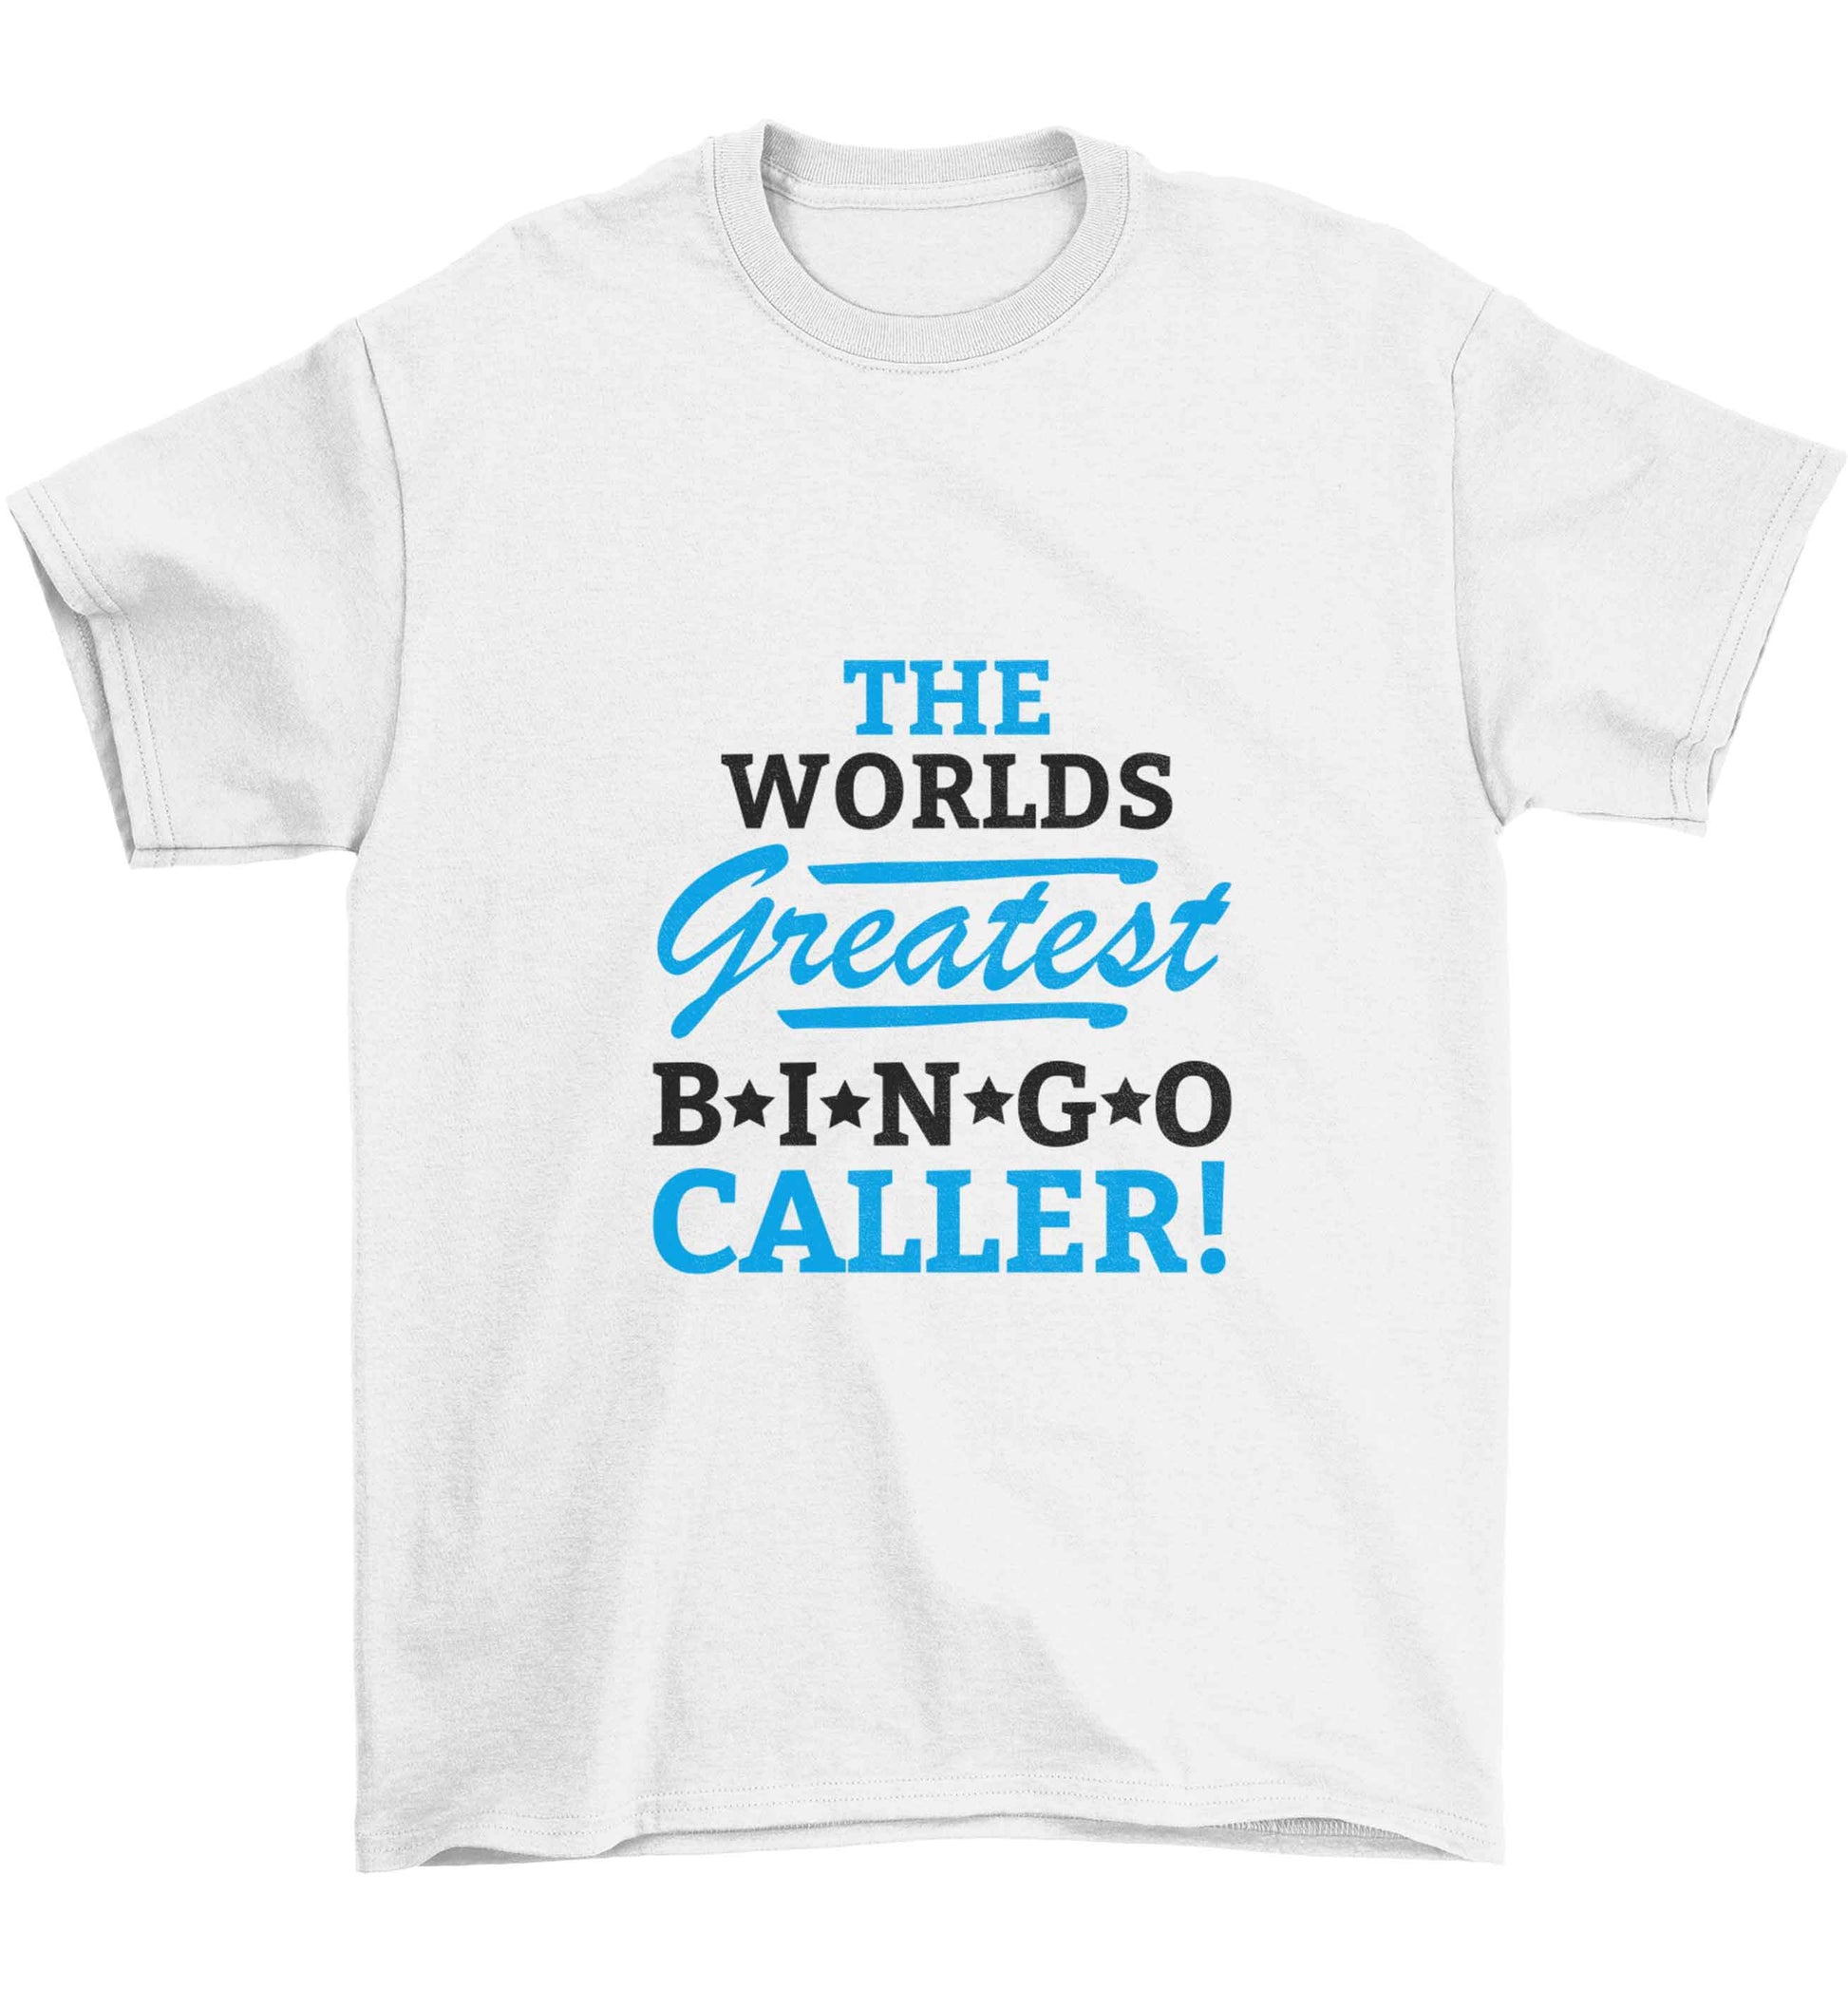 Worlds greatest bingo caller Children's white Tshirt 12-13 Years